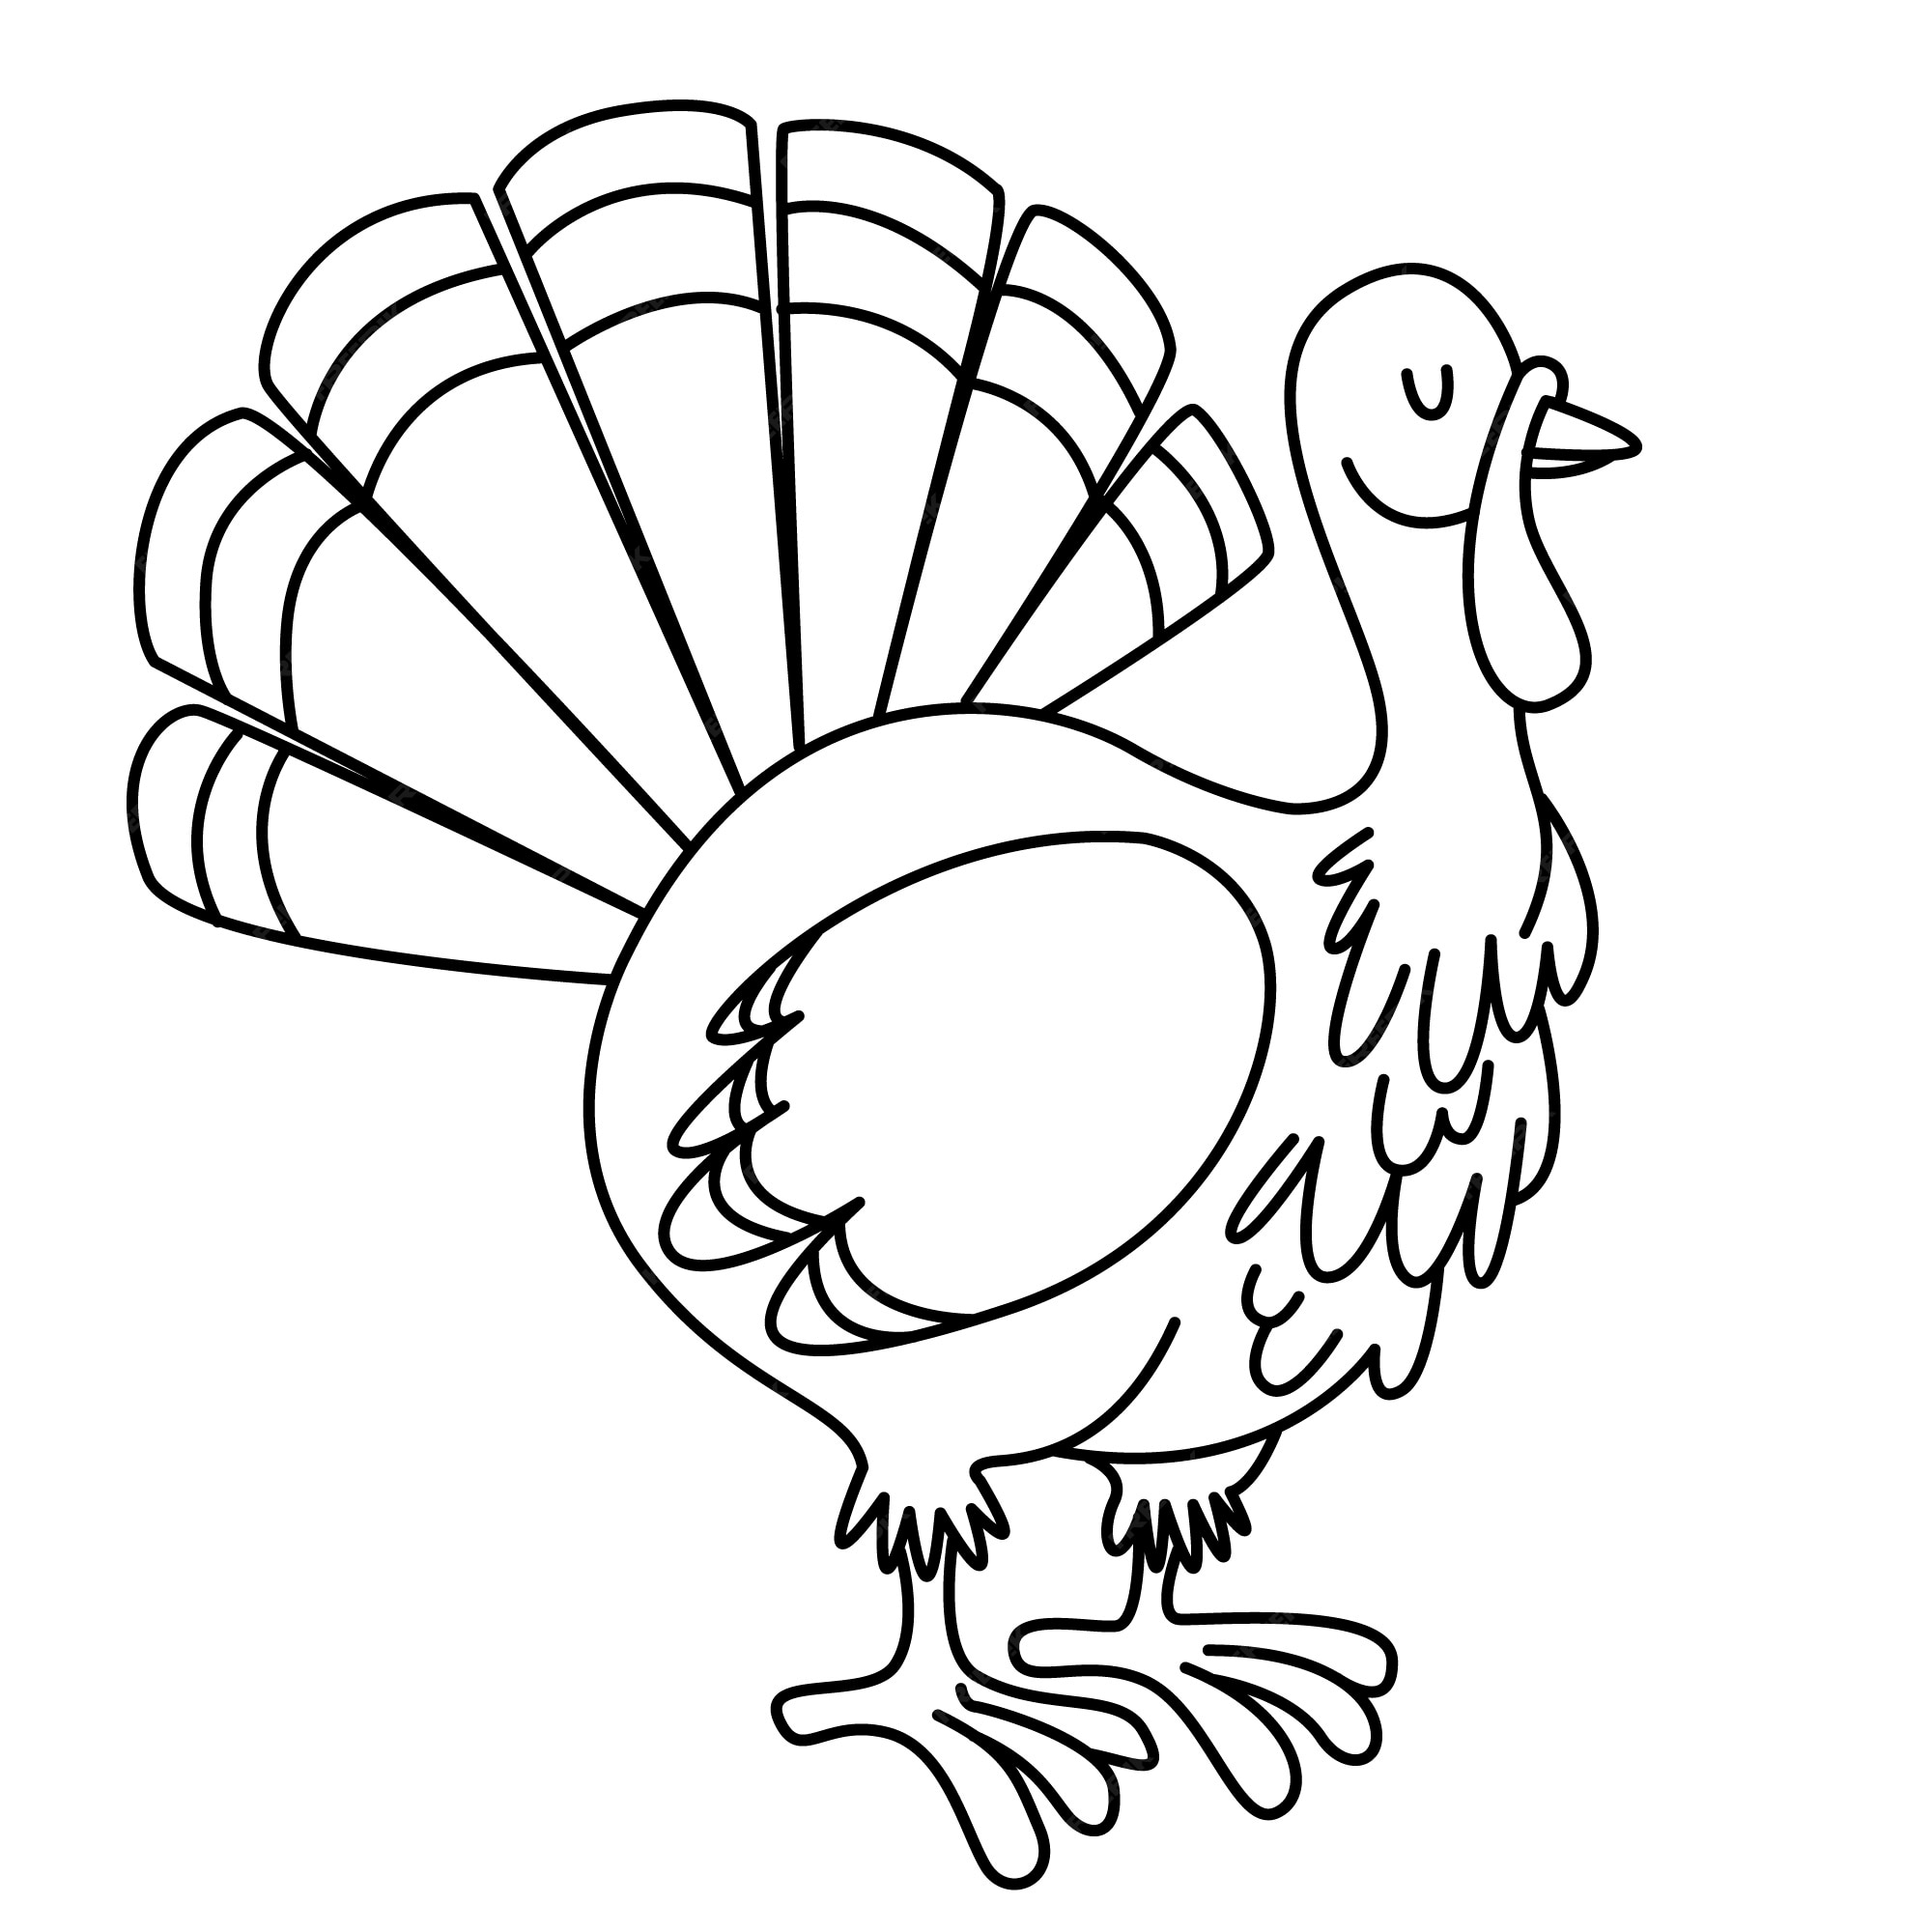 Free Vector Hand drawn turkey outline illustration